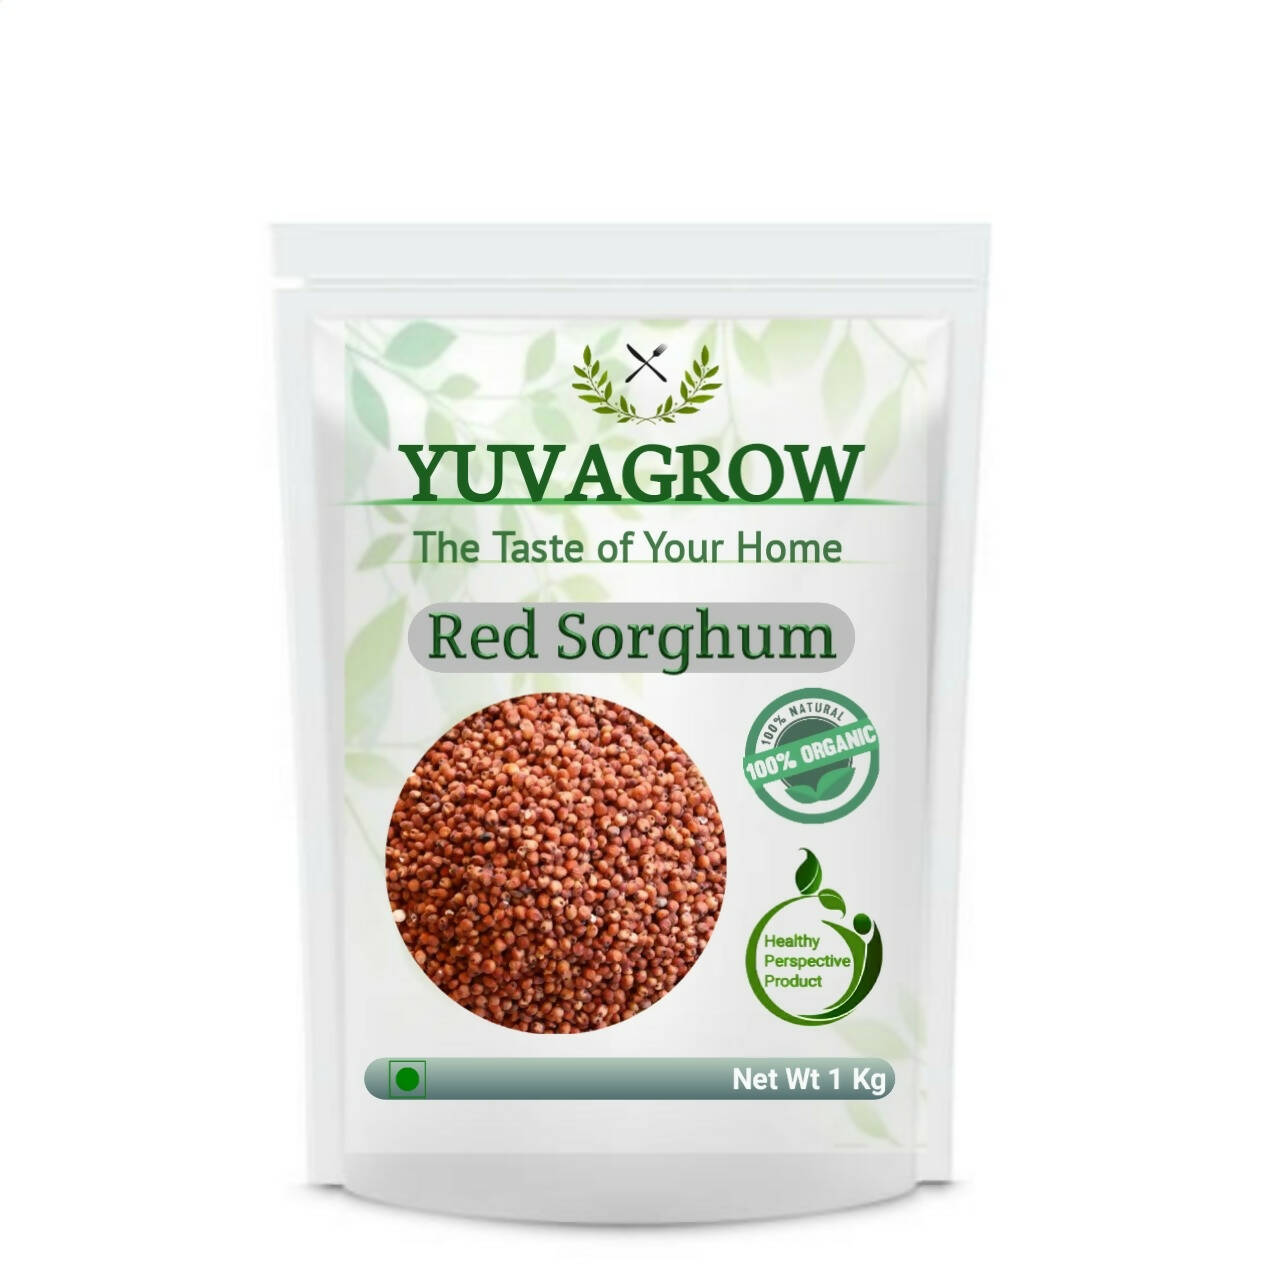 Yuvagrow??Red Sorghum - buy in USA, Australia, Canada